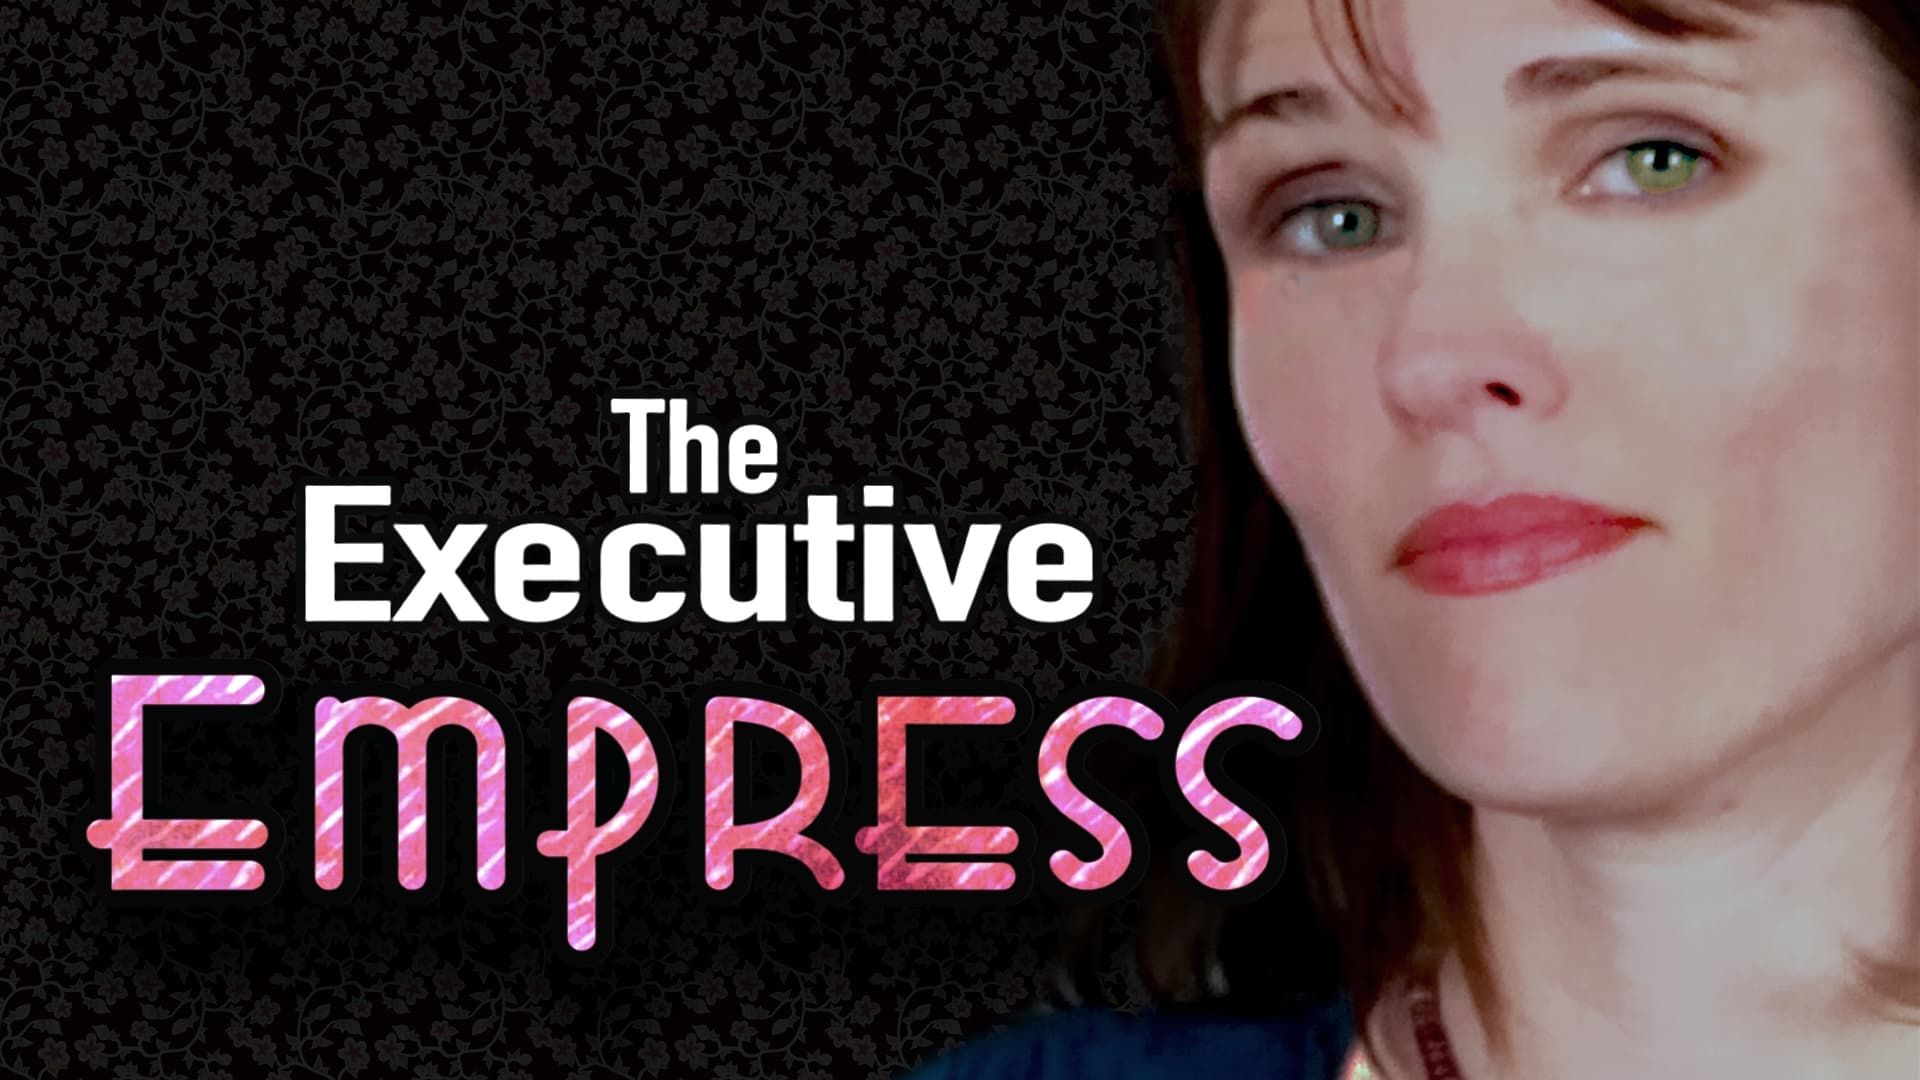 The Executive Empress background